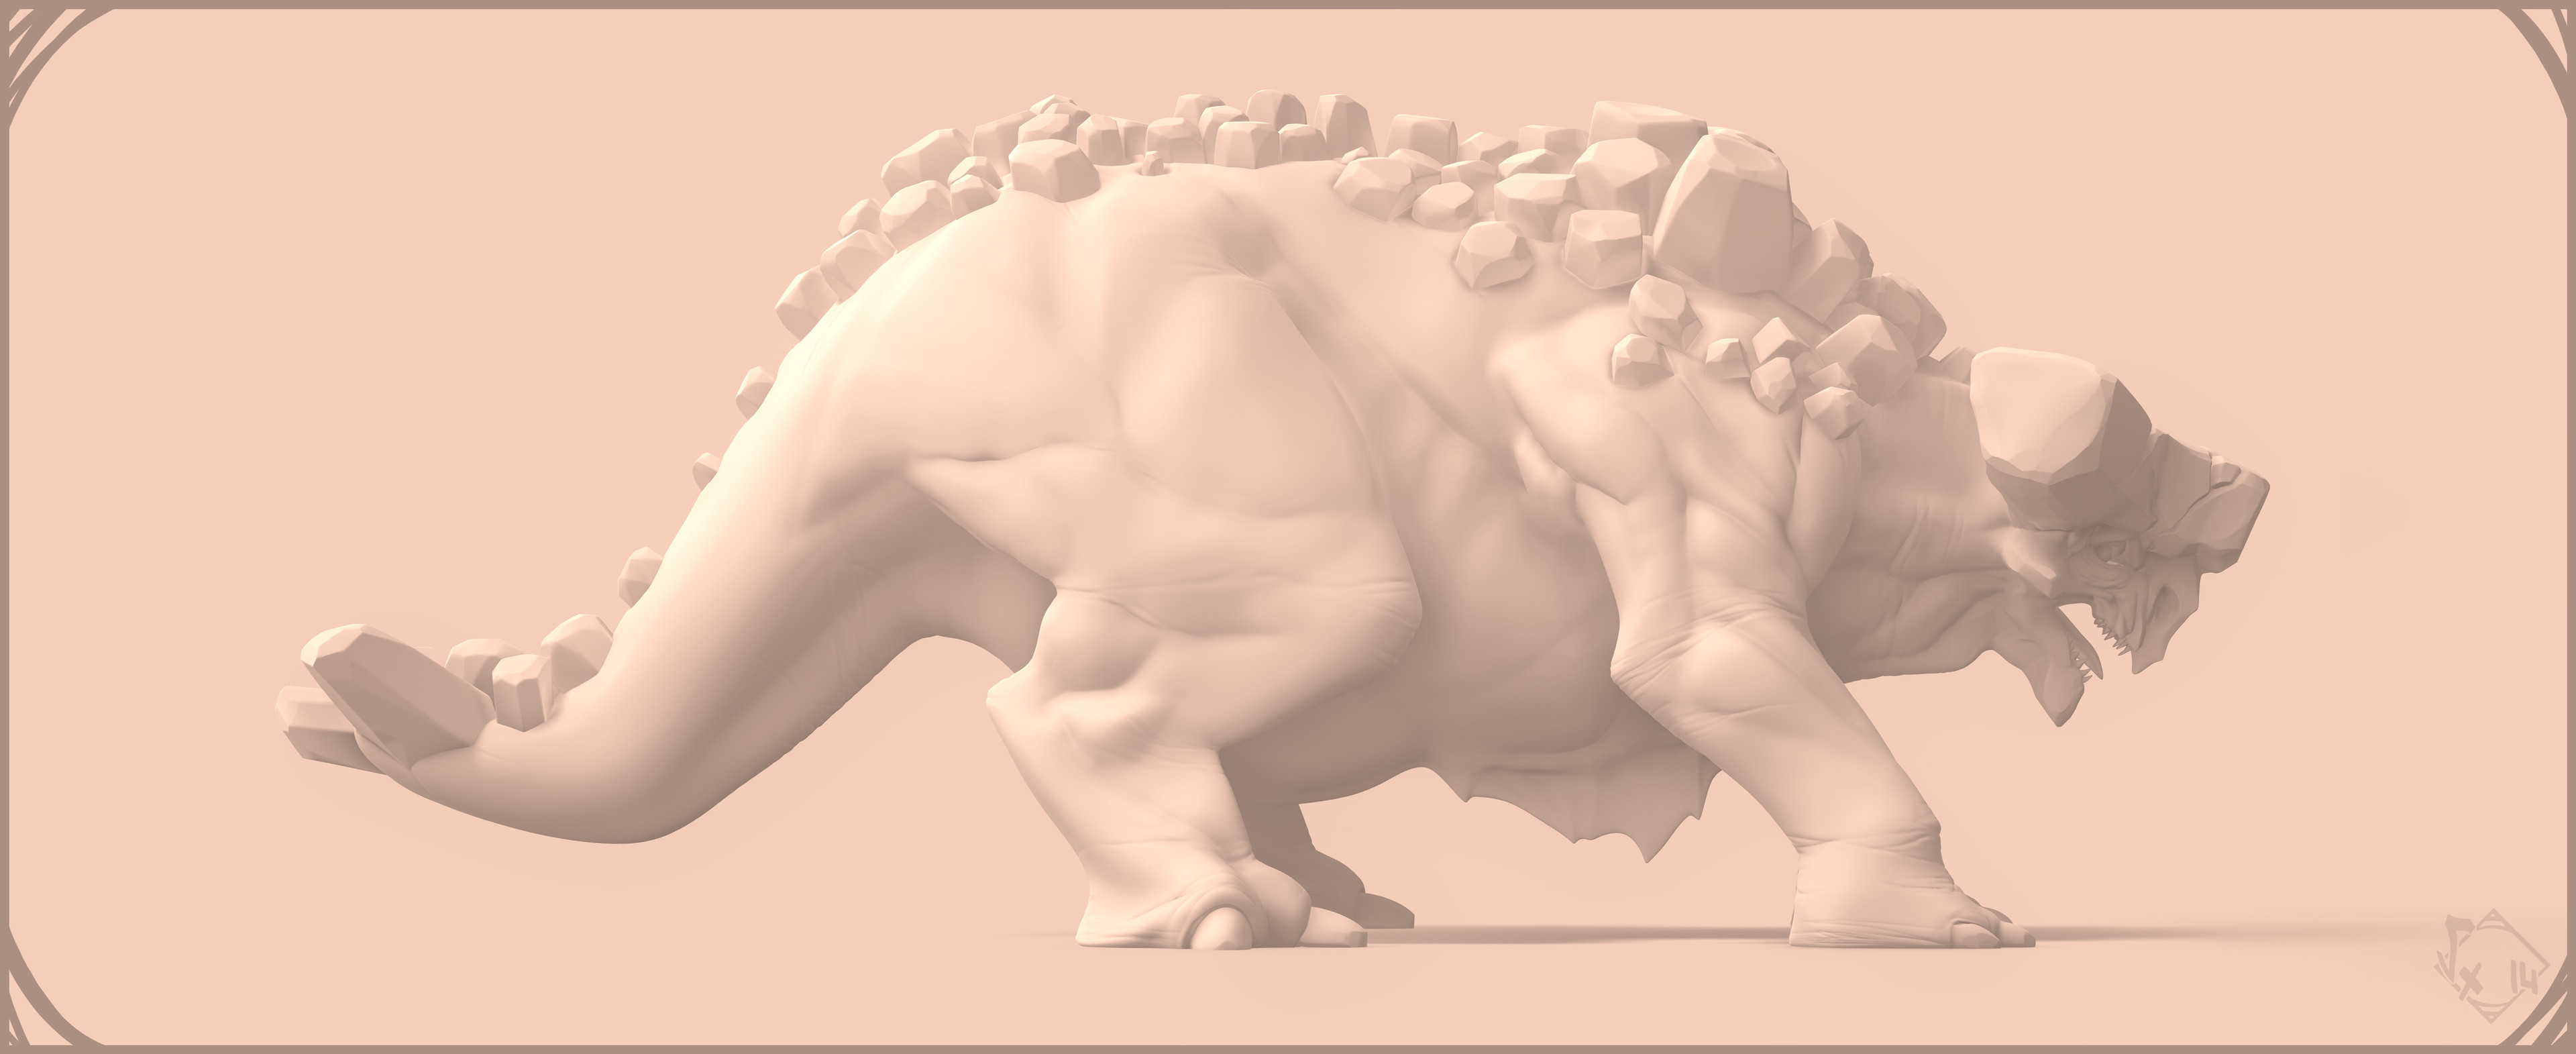 etienne-beschet-cha-petrustaurus-sculpt-